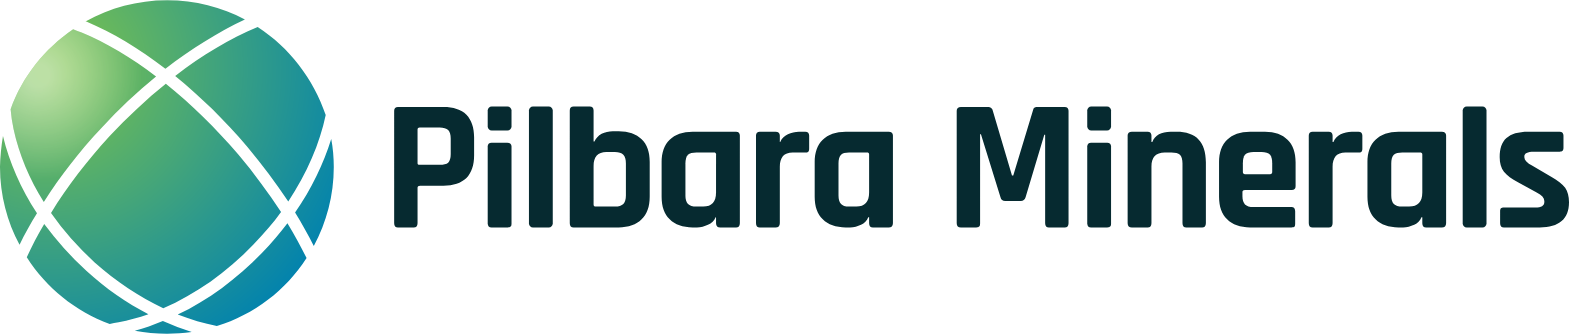 Pilbara Minerals logo large (transparent PNG)